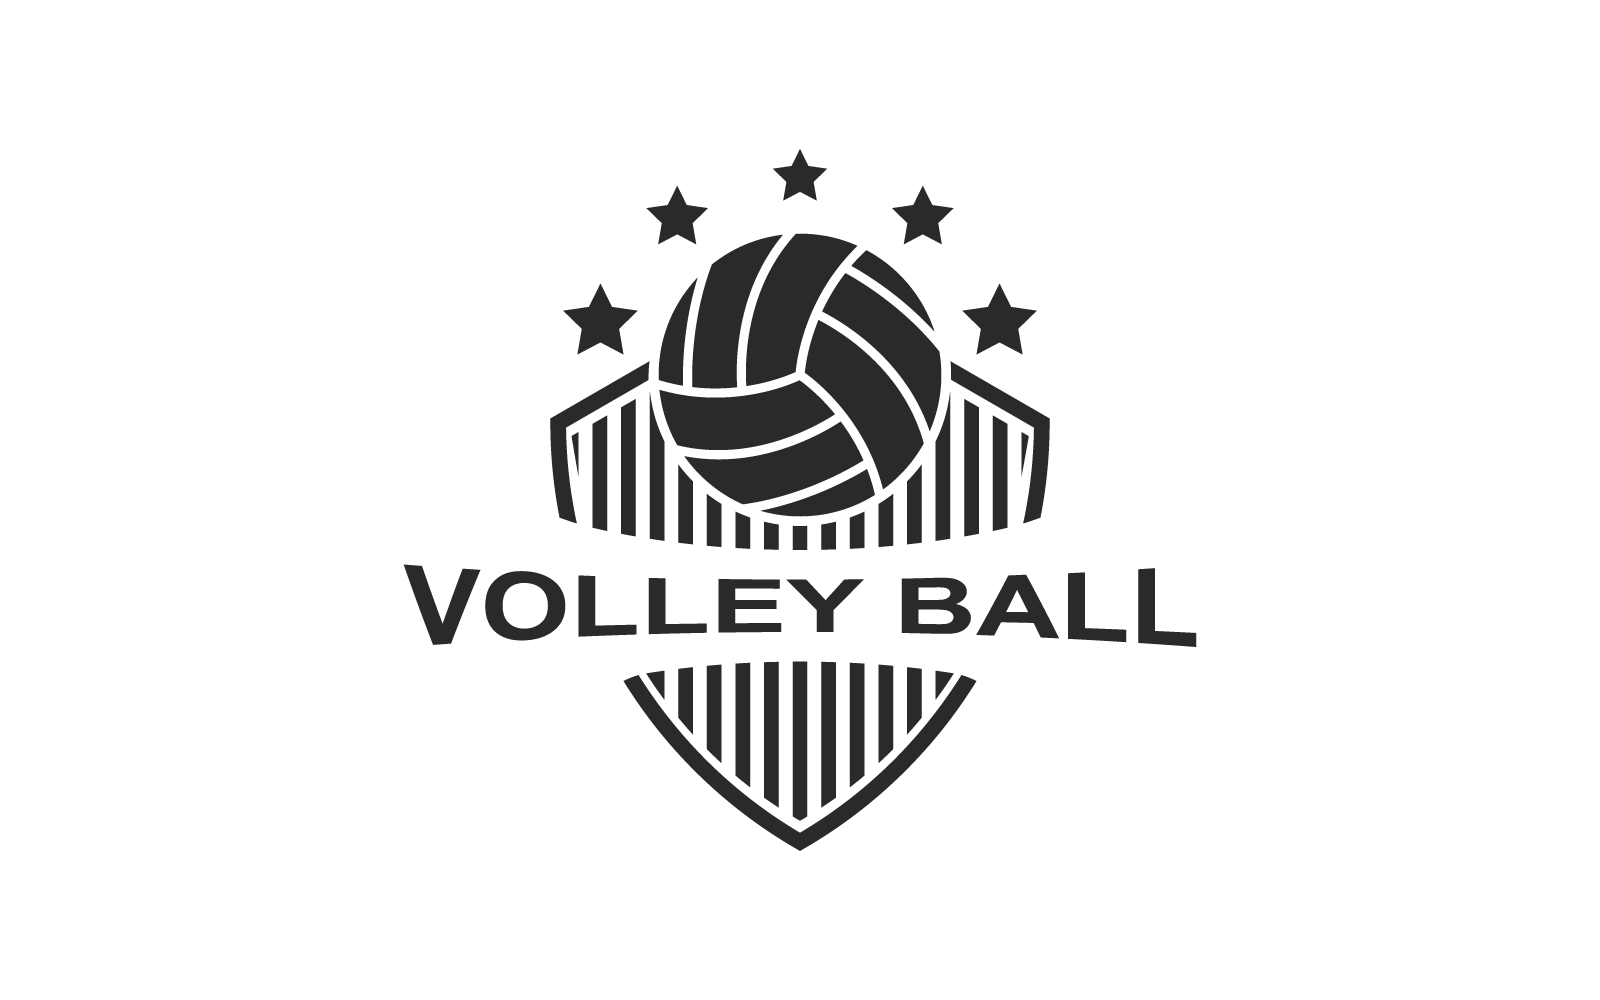 Volley ball illustration logo vector flat design template